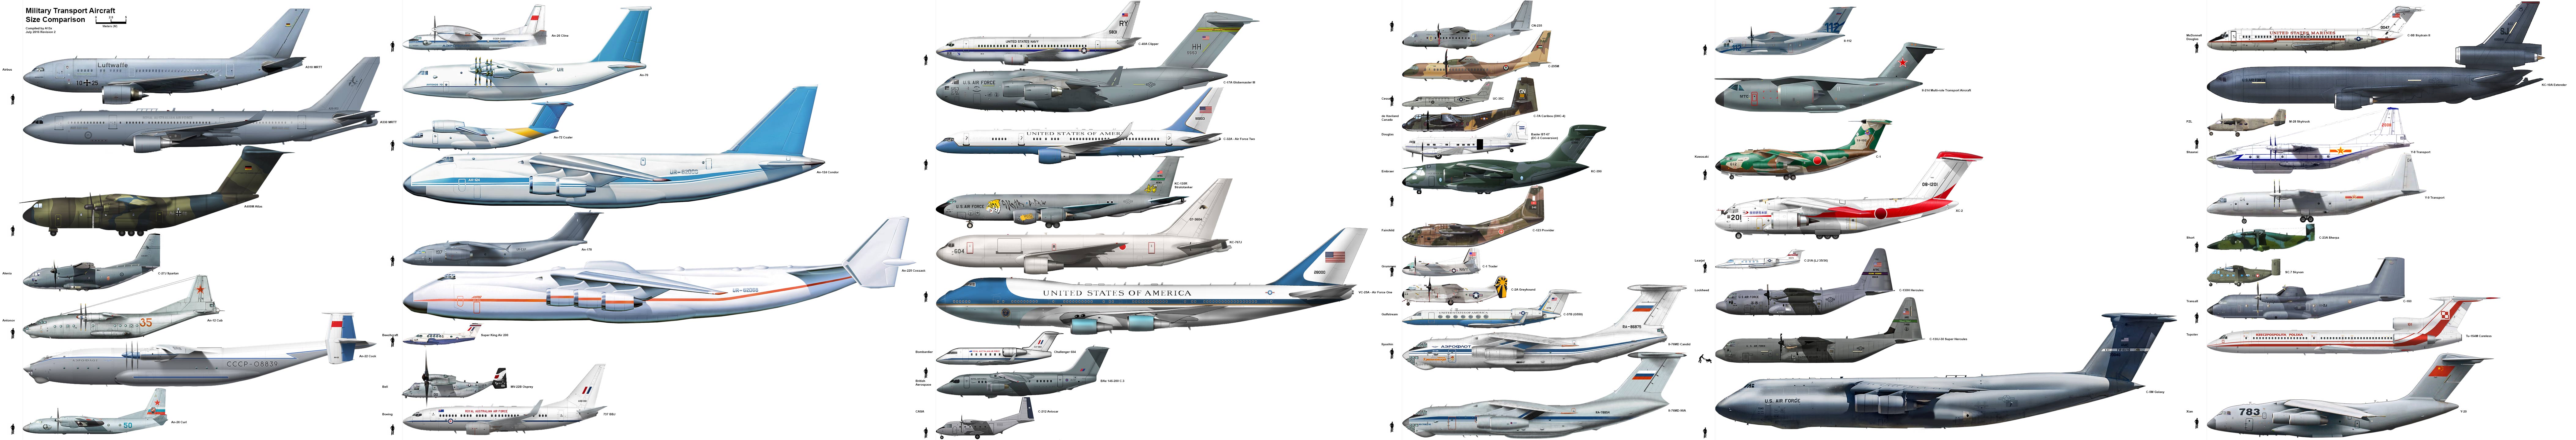 Commercial Aircraft Size Comparison Chart